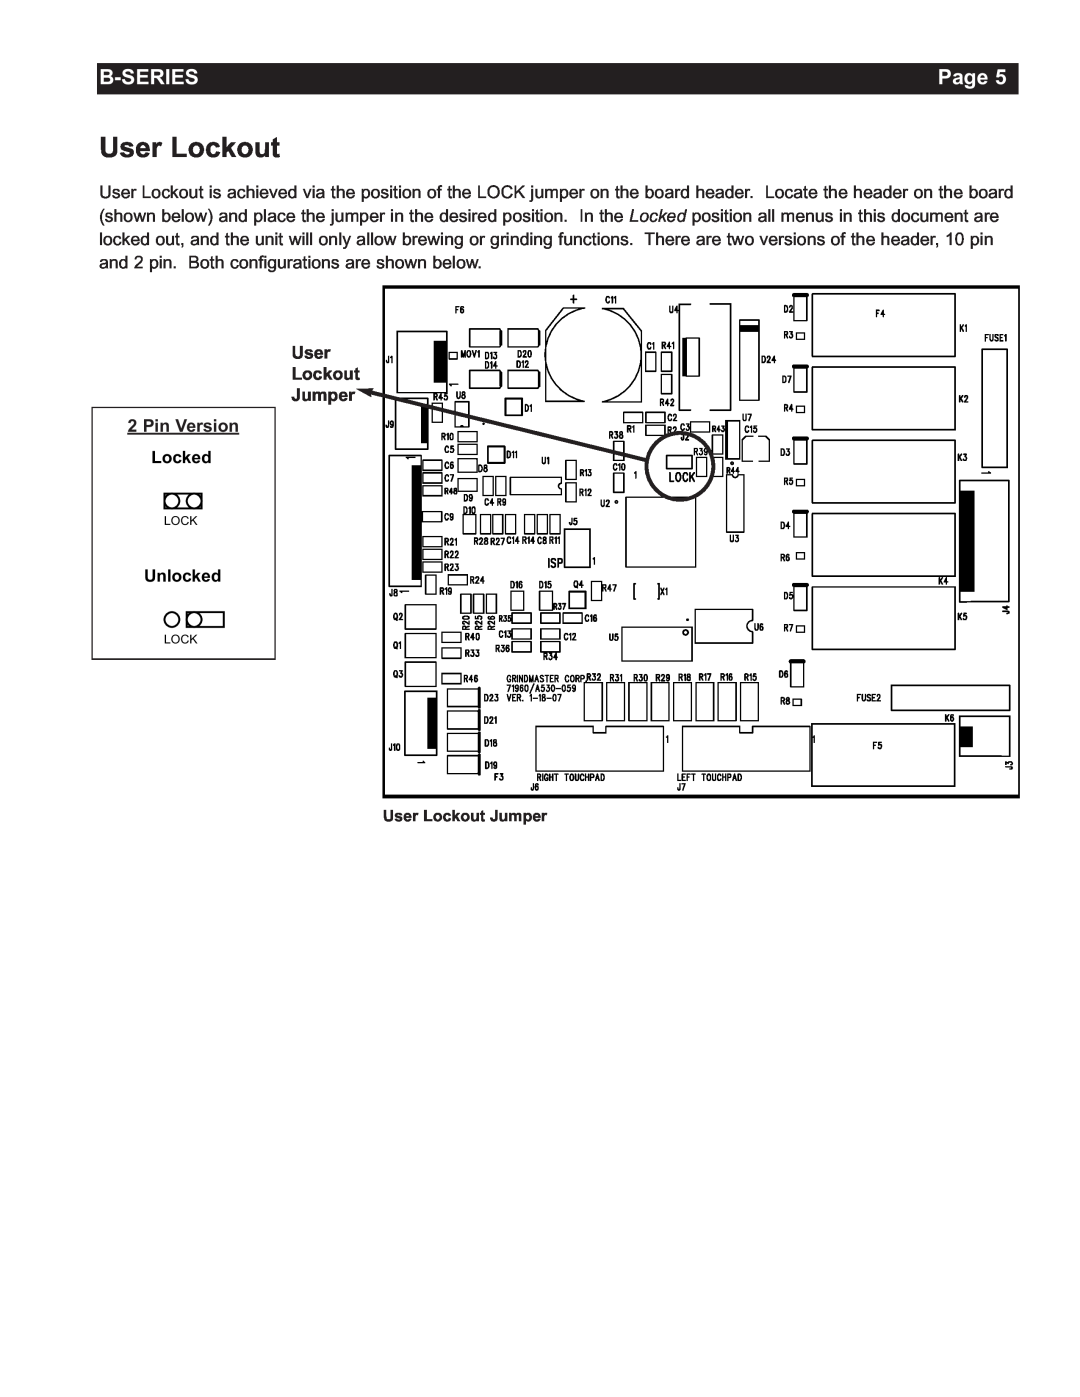 Grindmaster AMW B-Series manual Page, User Lockout Jumper 2 Pin Version, Locked, Unlocked 